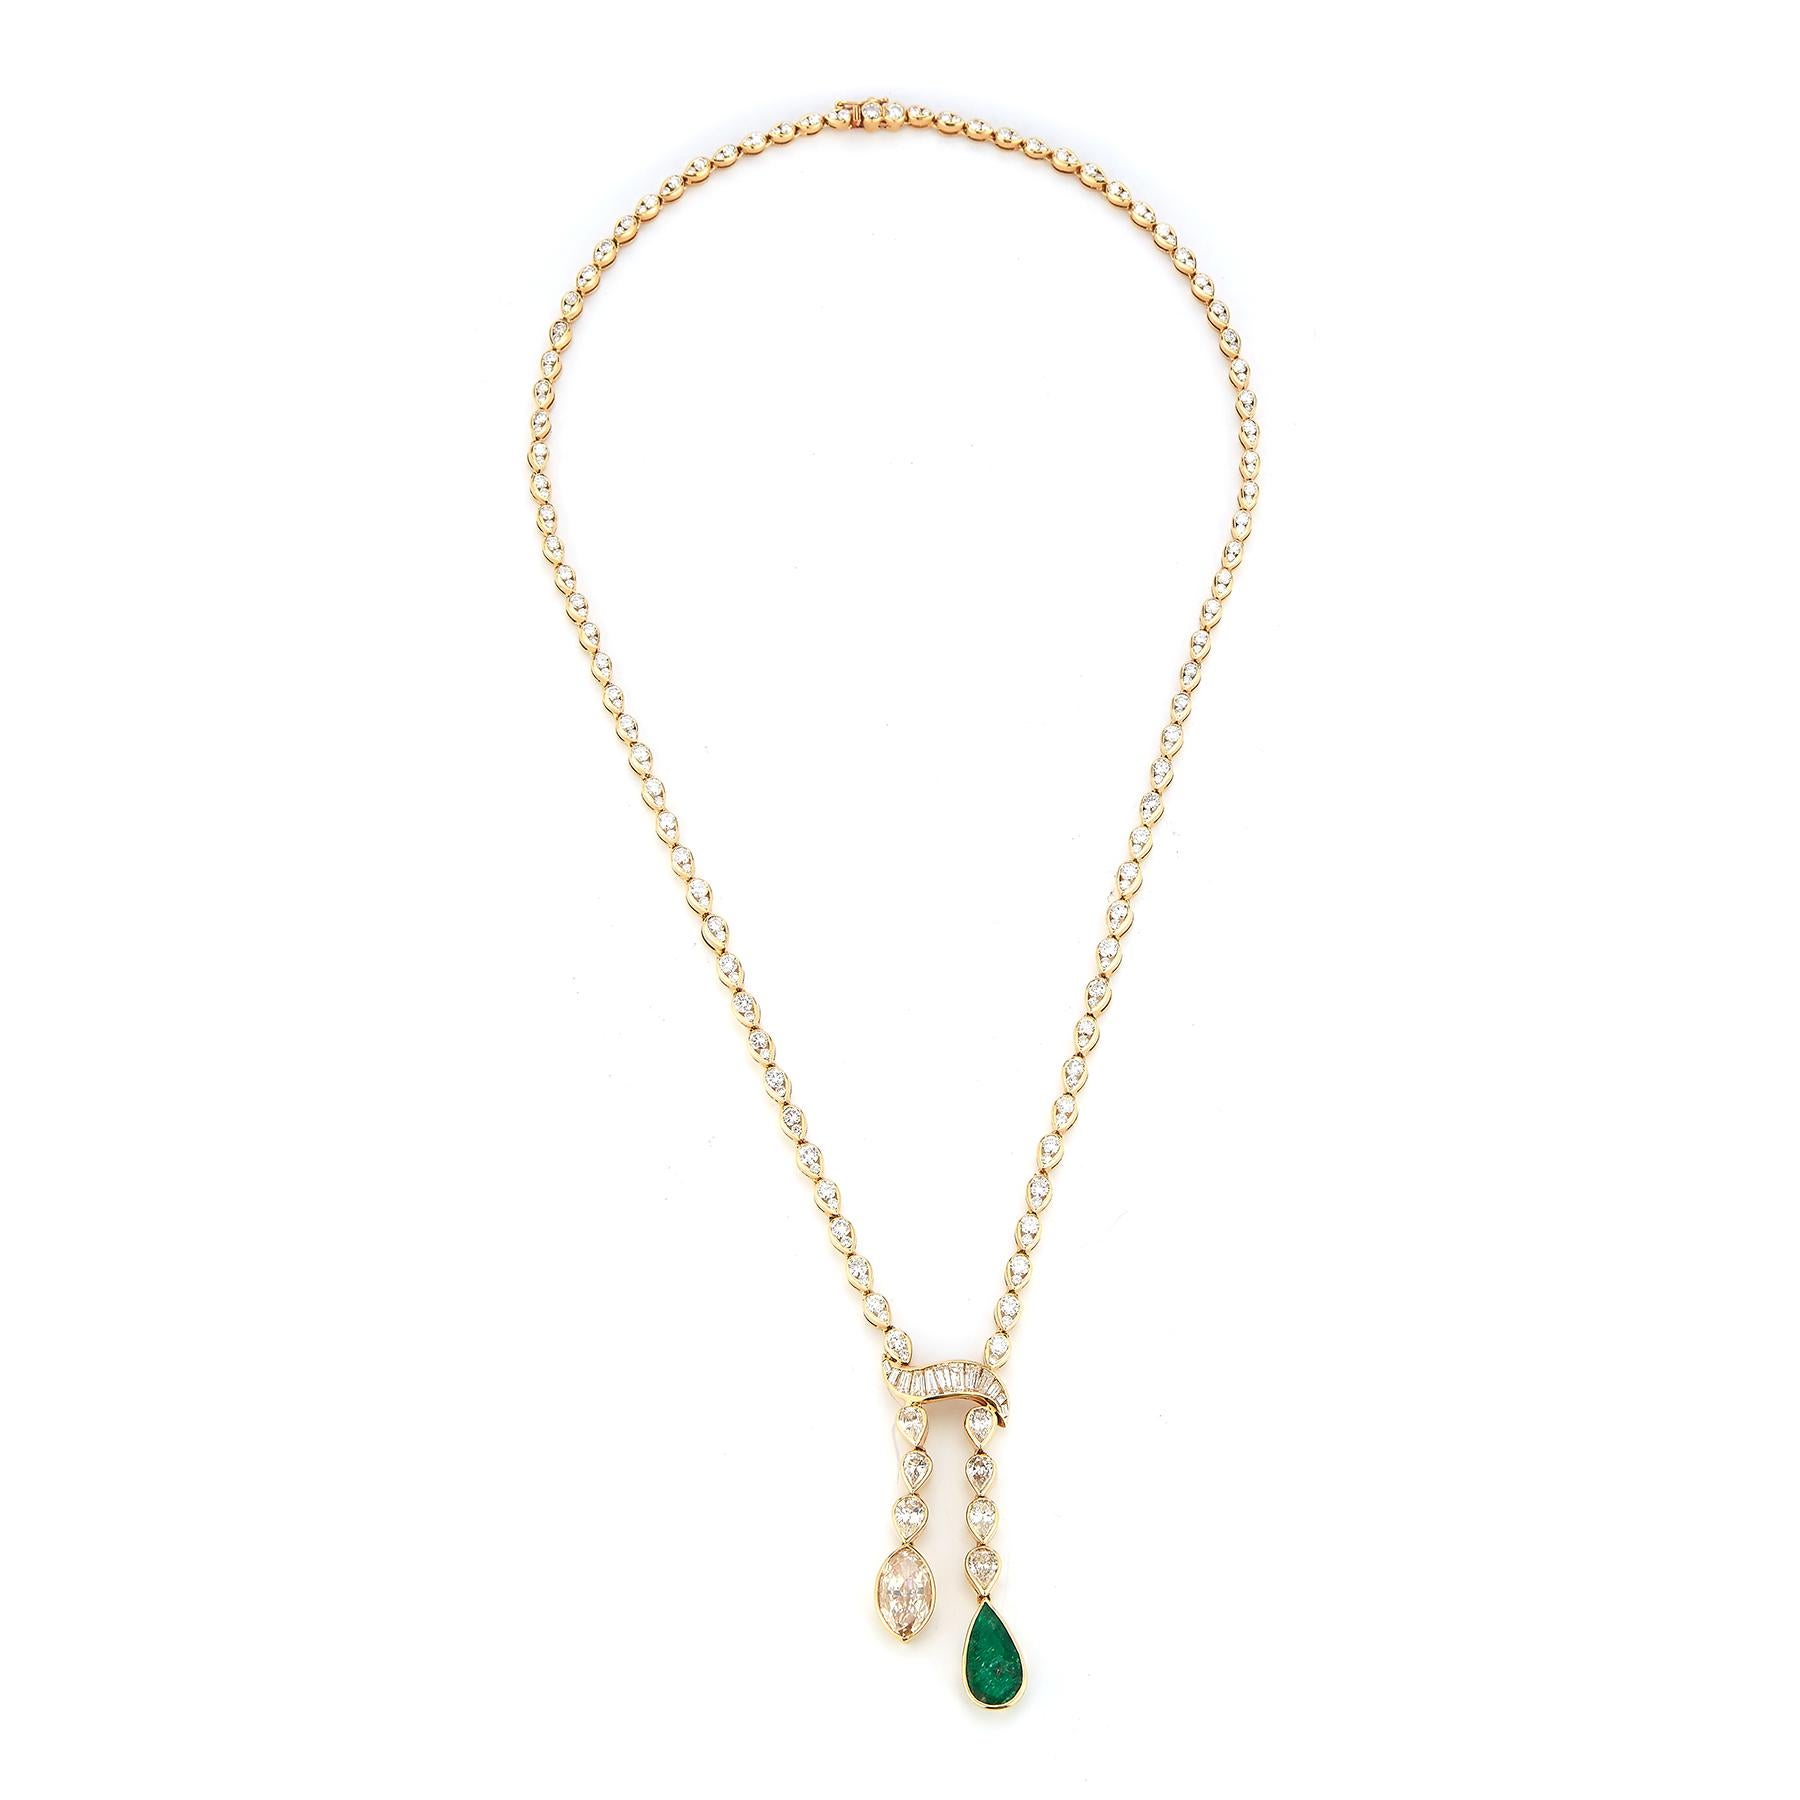 Emerald & Diamond Pear Shape Necklace 

Measurements: Length 18